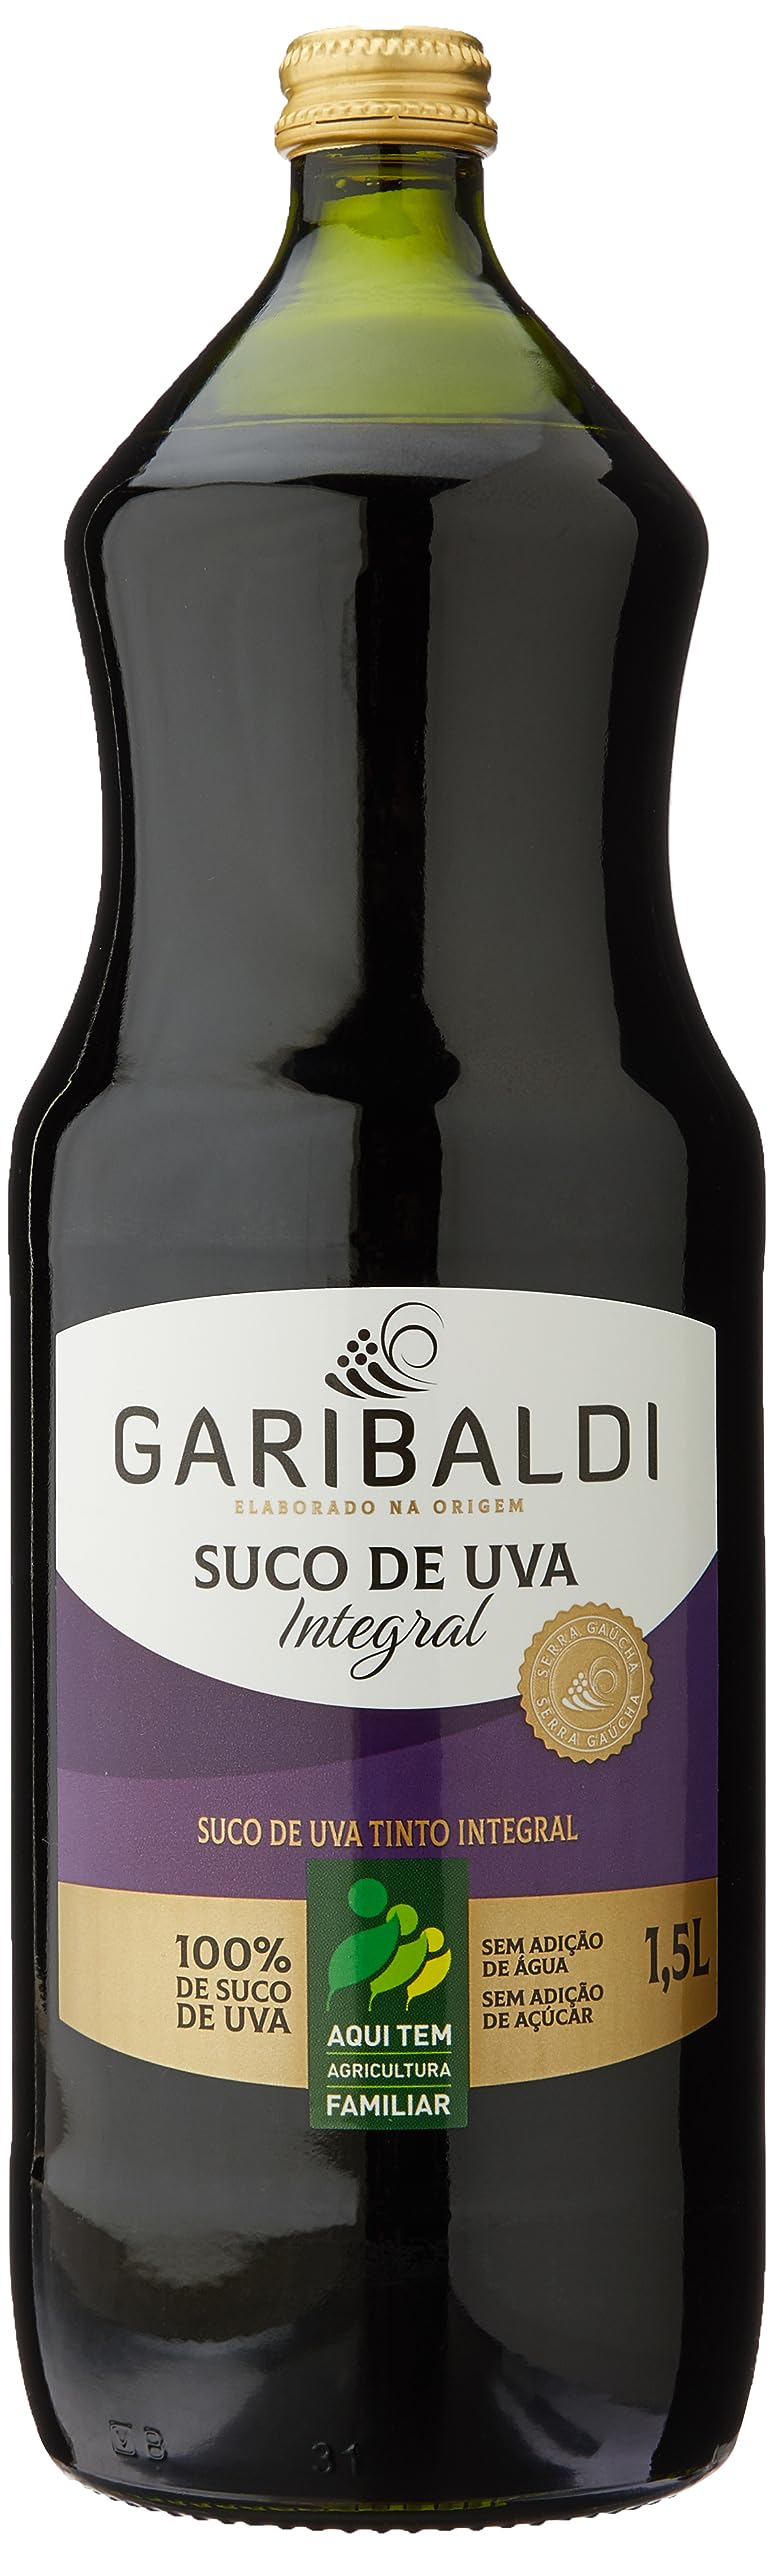 Suco de Uva Integral, Garibaldi
